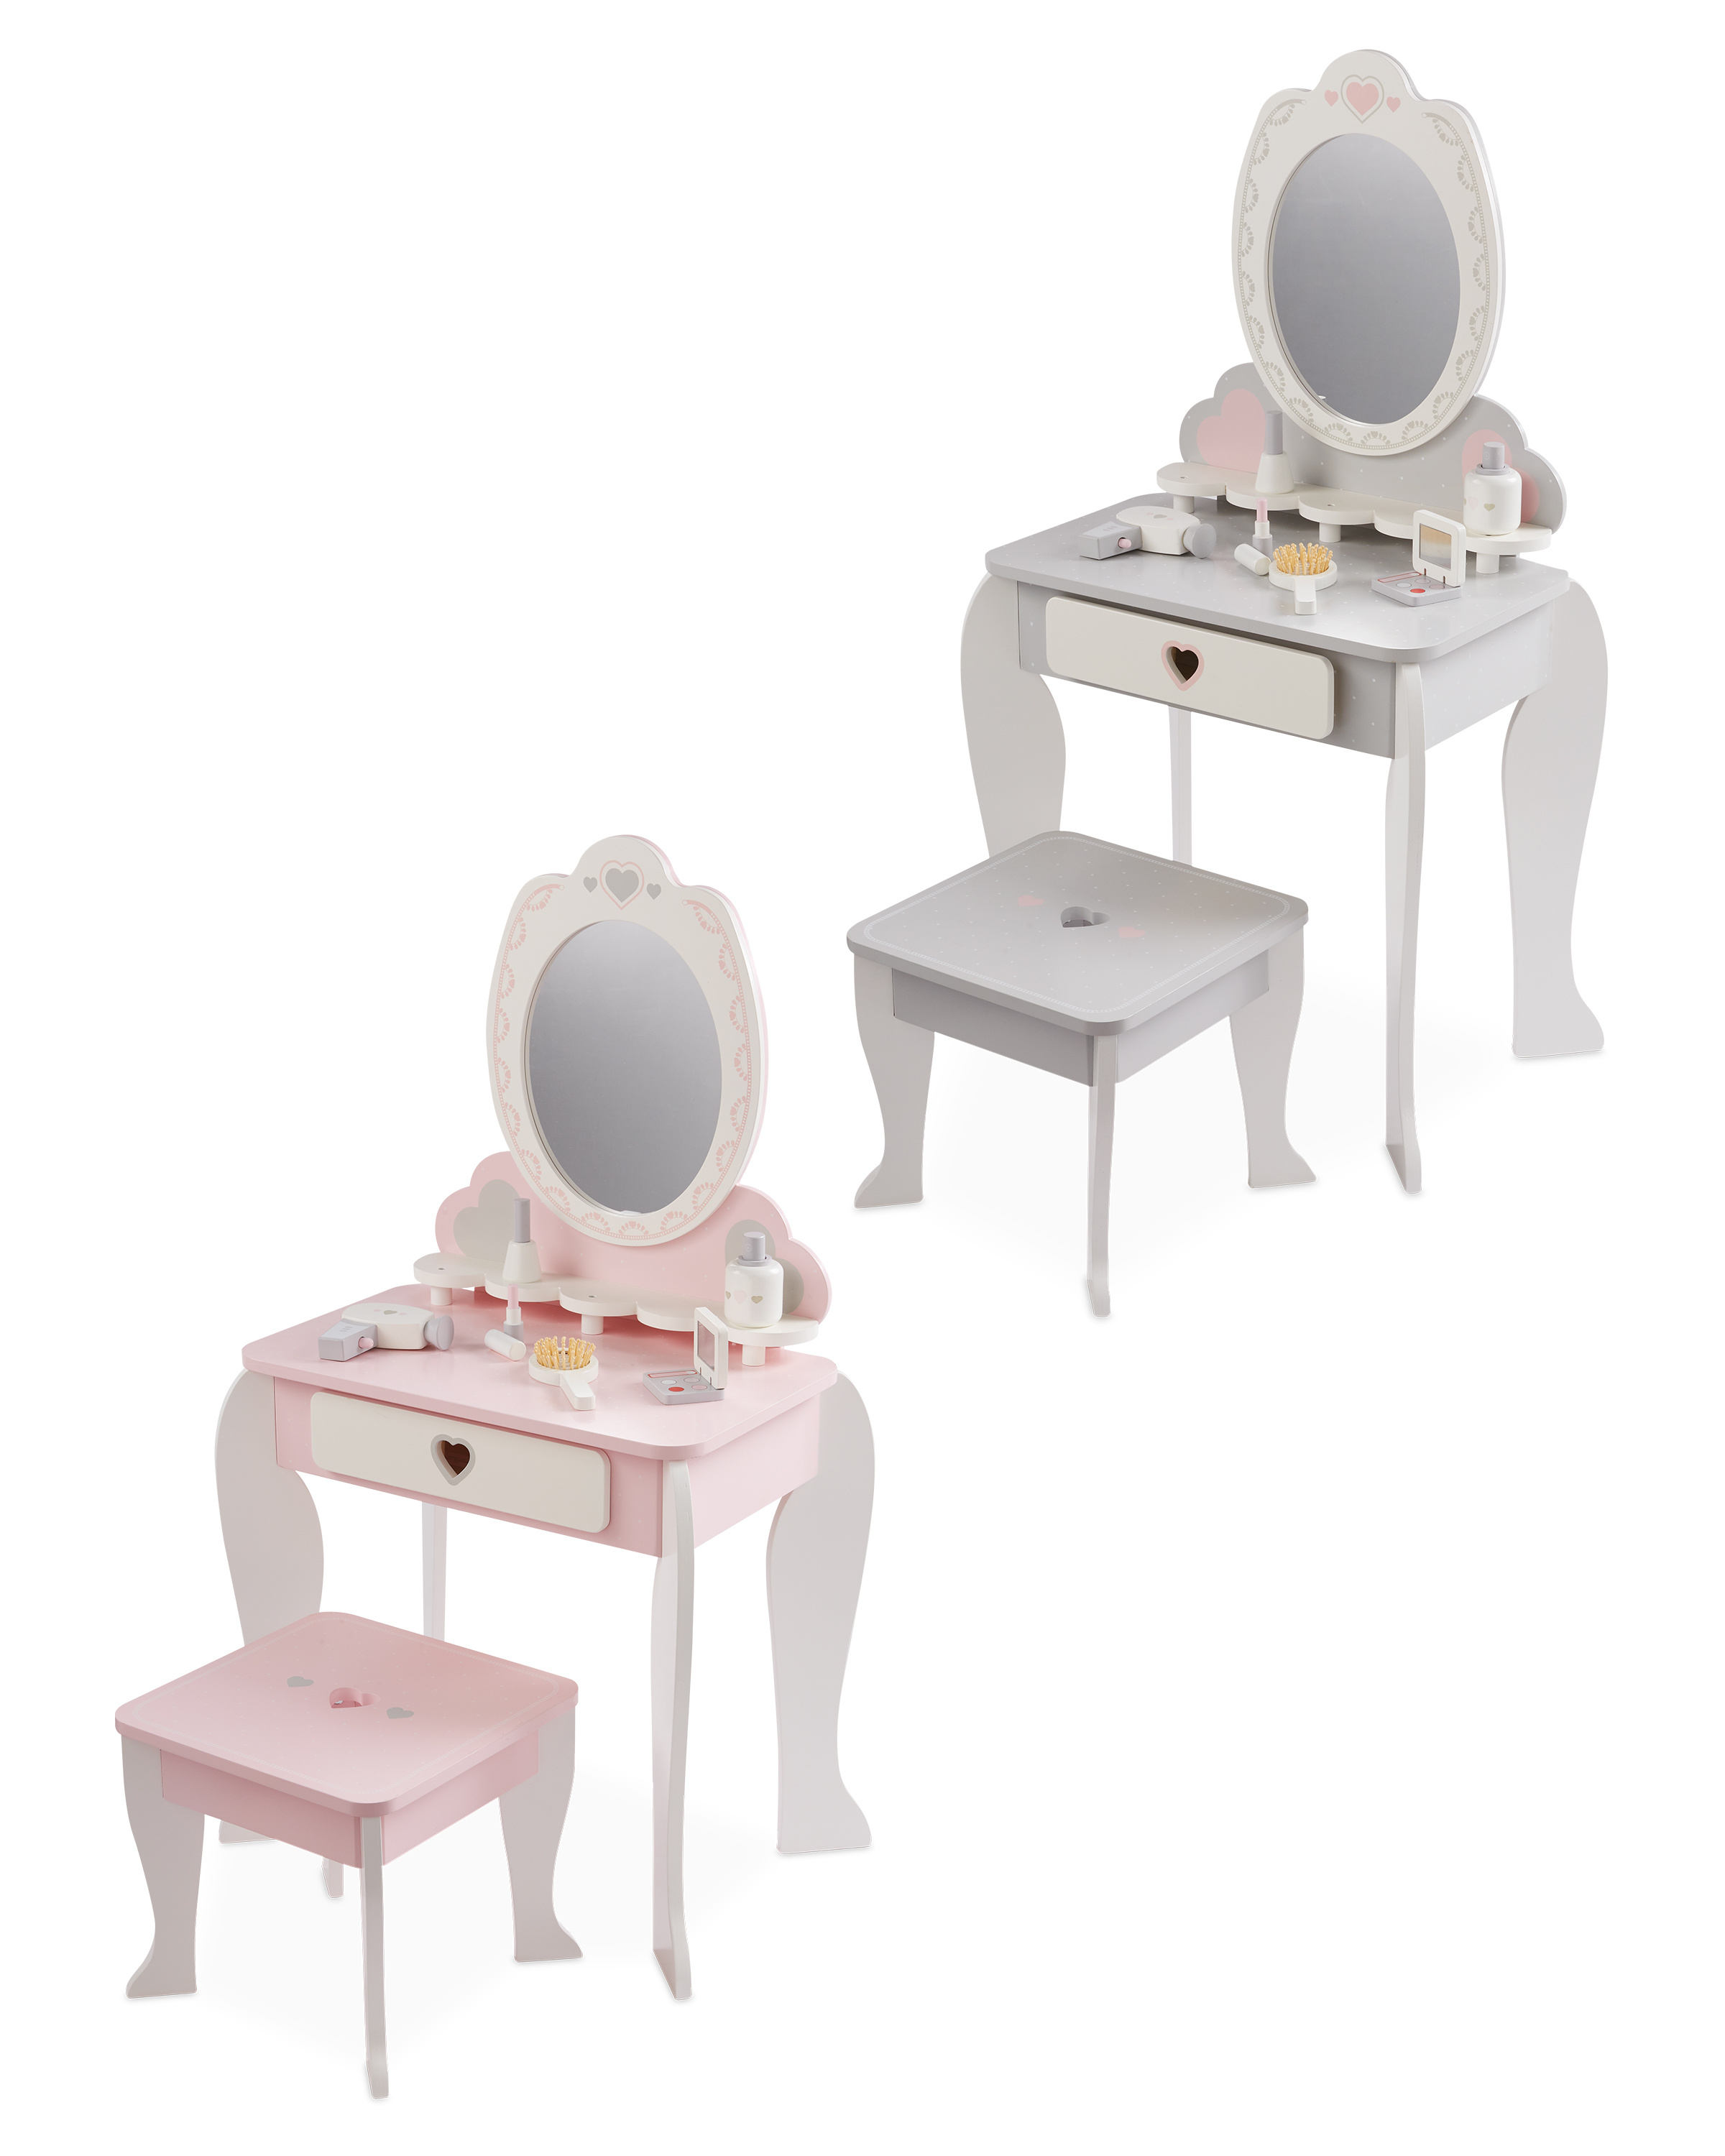 Toy Vanity Unit Accessories Aldi Uk, Childrens Vanity Sets